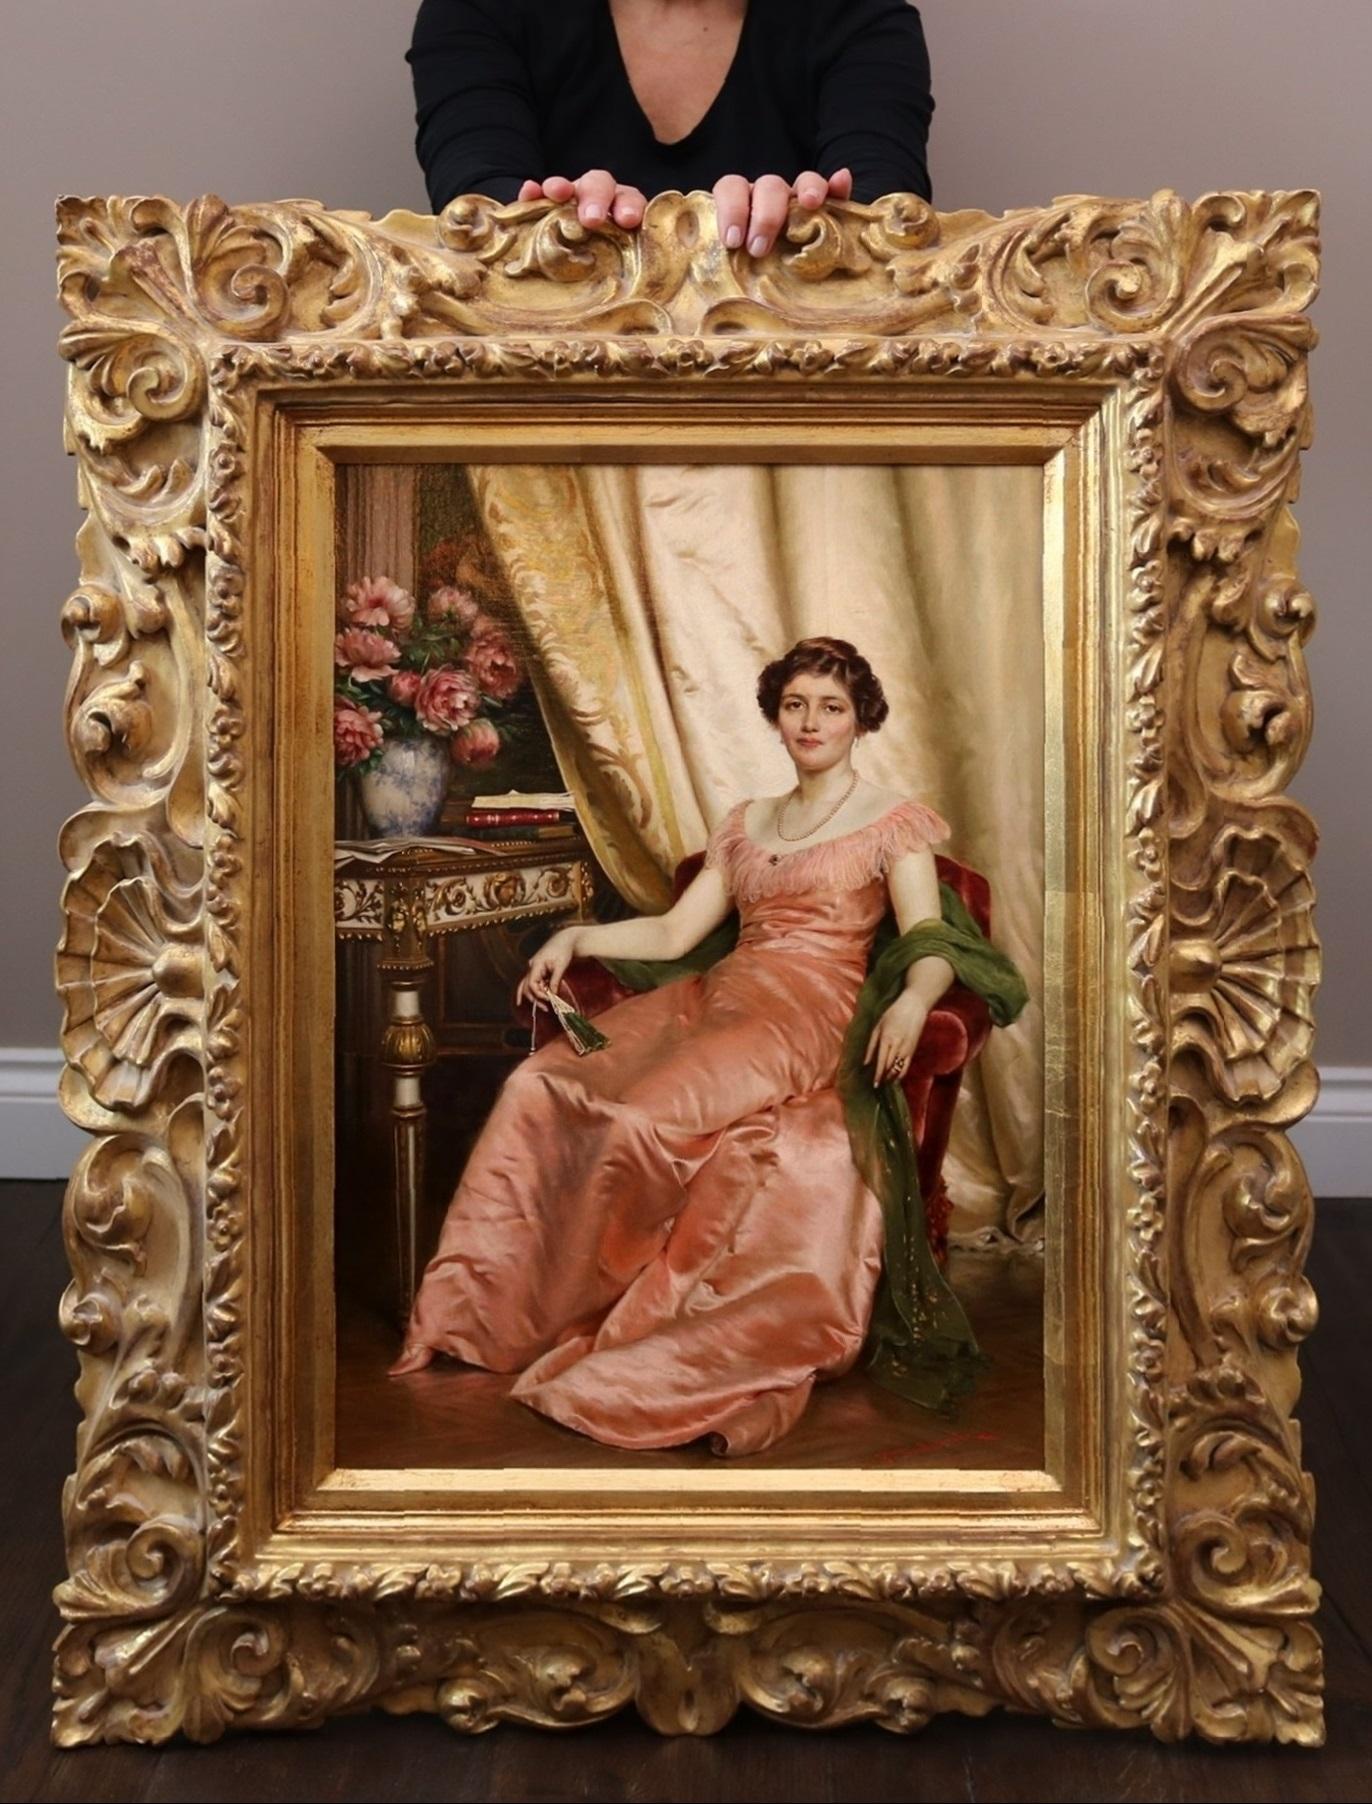 Frédéric Soulacroix Figurative Painting – Regina dei Fiori - 19. Jahrhundert Ölgemälde Gesellschaft, Porträt italienischer Schönheit, Porträt